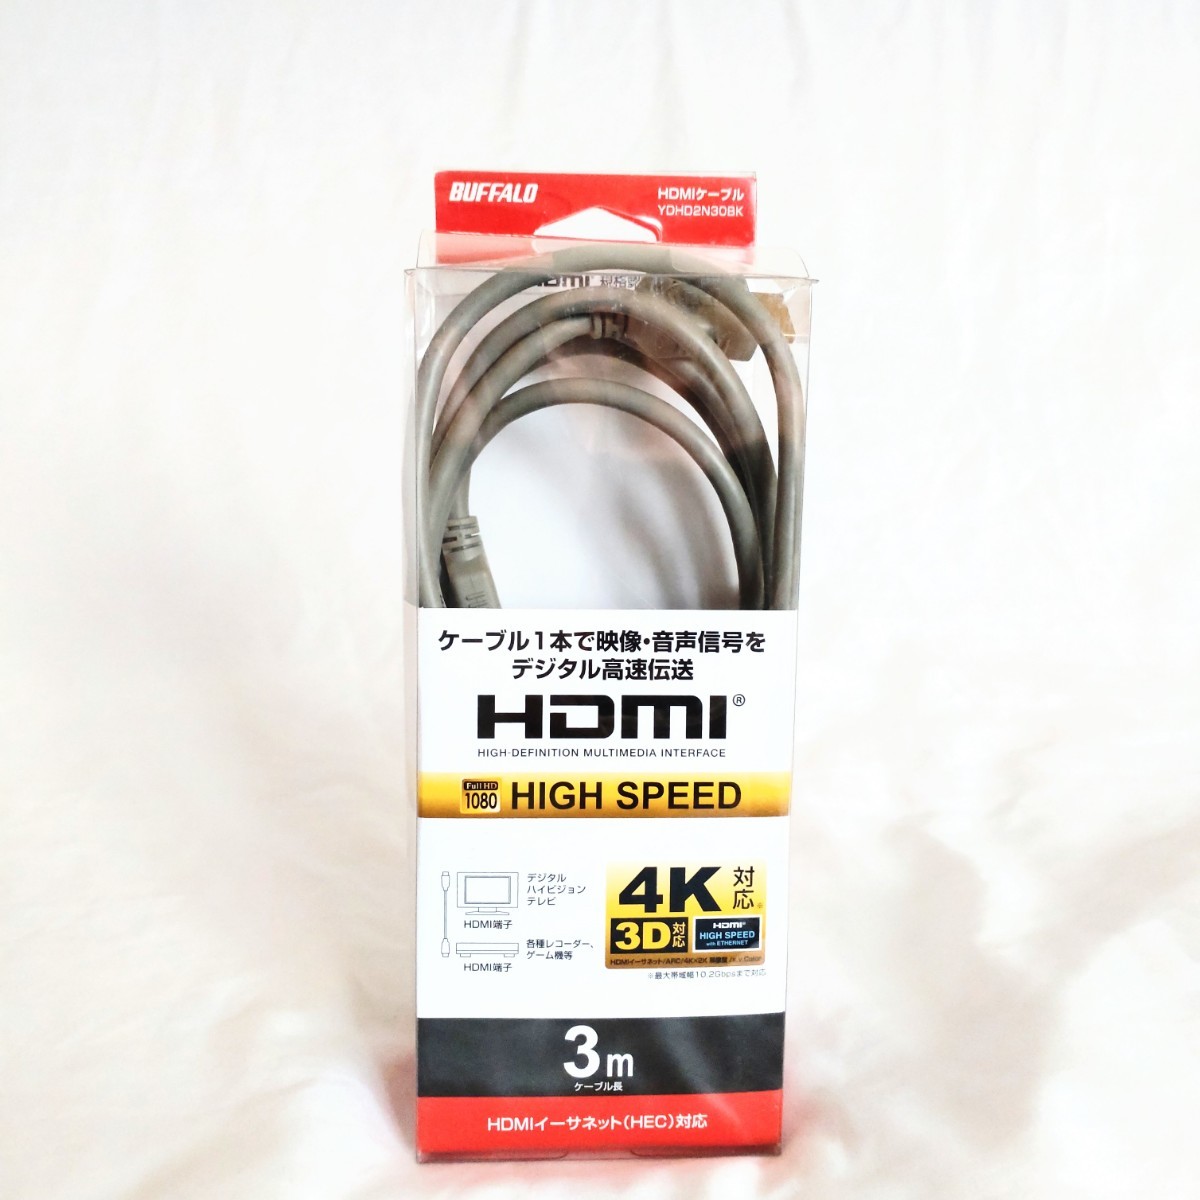 HDMIケーブルバッファローBUFFALO HDMIケーブルイーサネット(HEC)対応 ハイスピードHDMIケーブル4K対応【OKMS46】_画像10